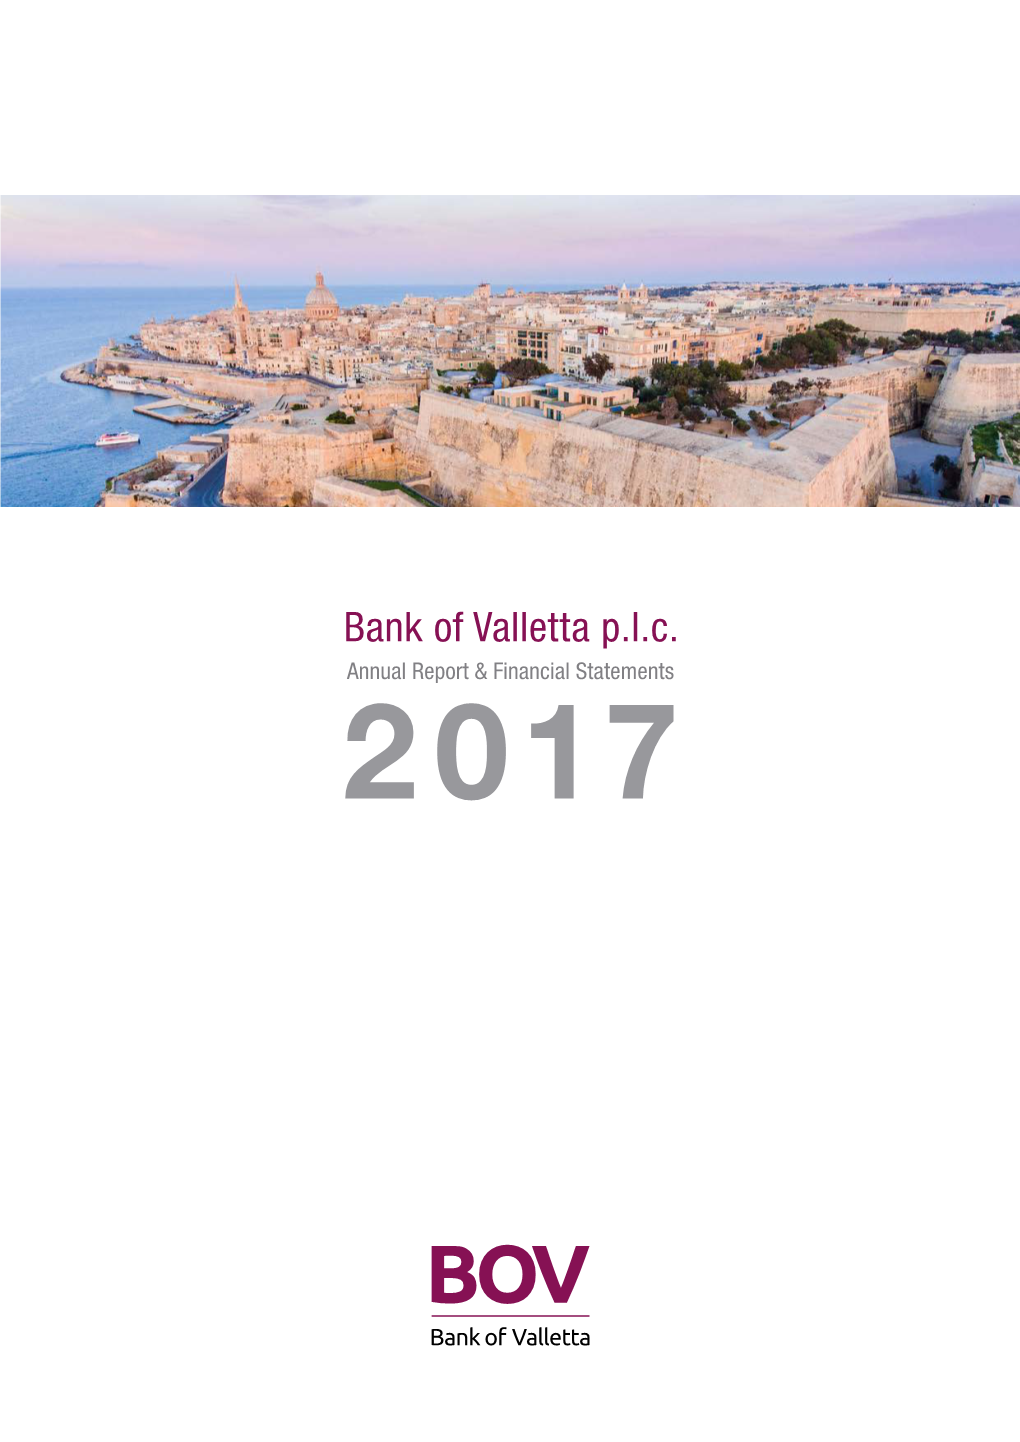 Bank of Valletta P.L.C